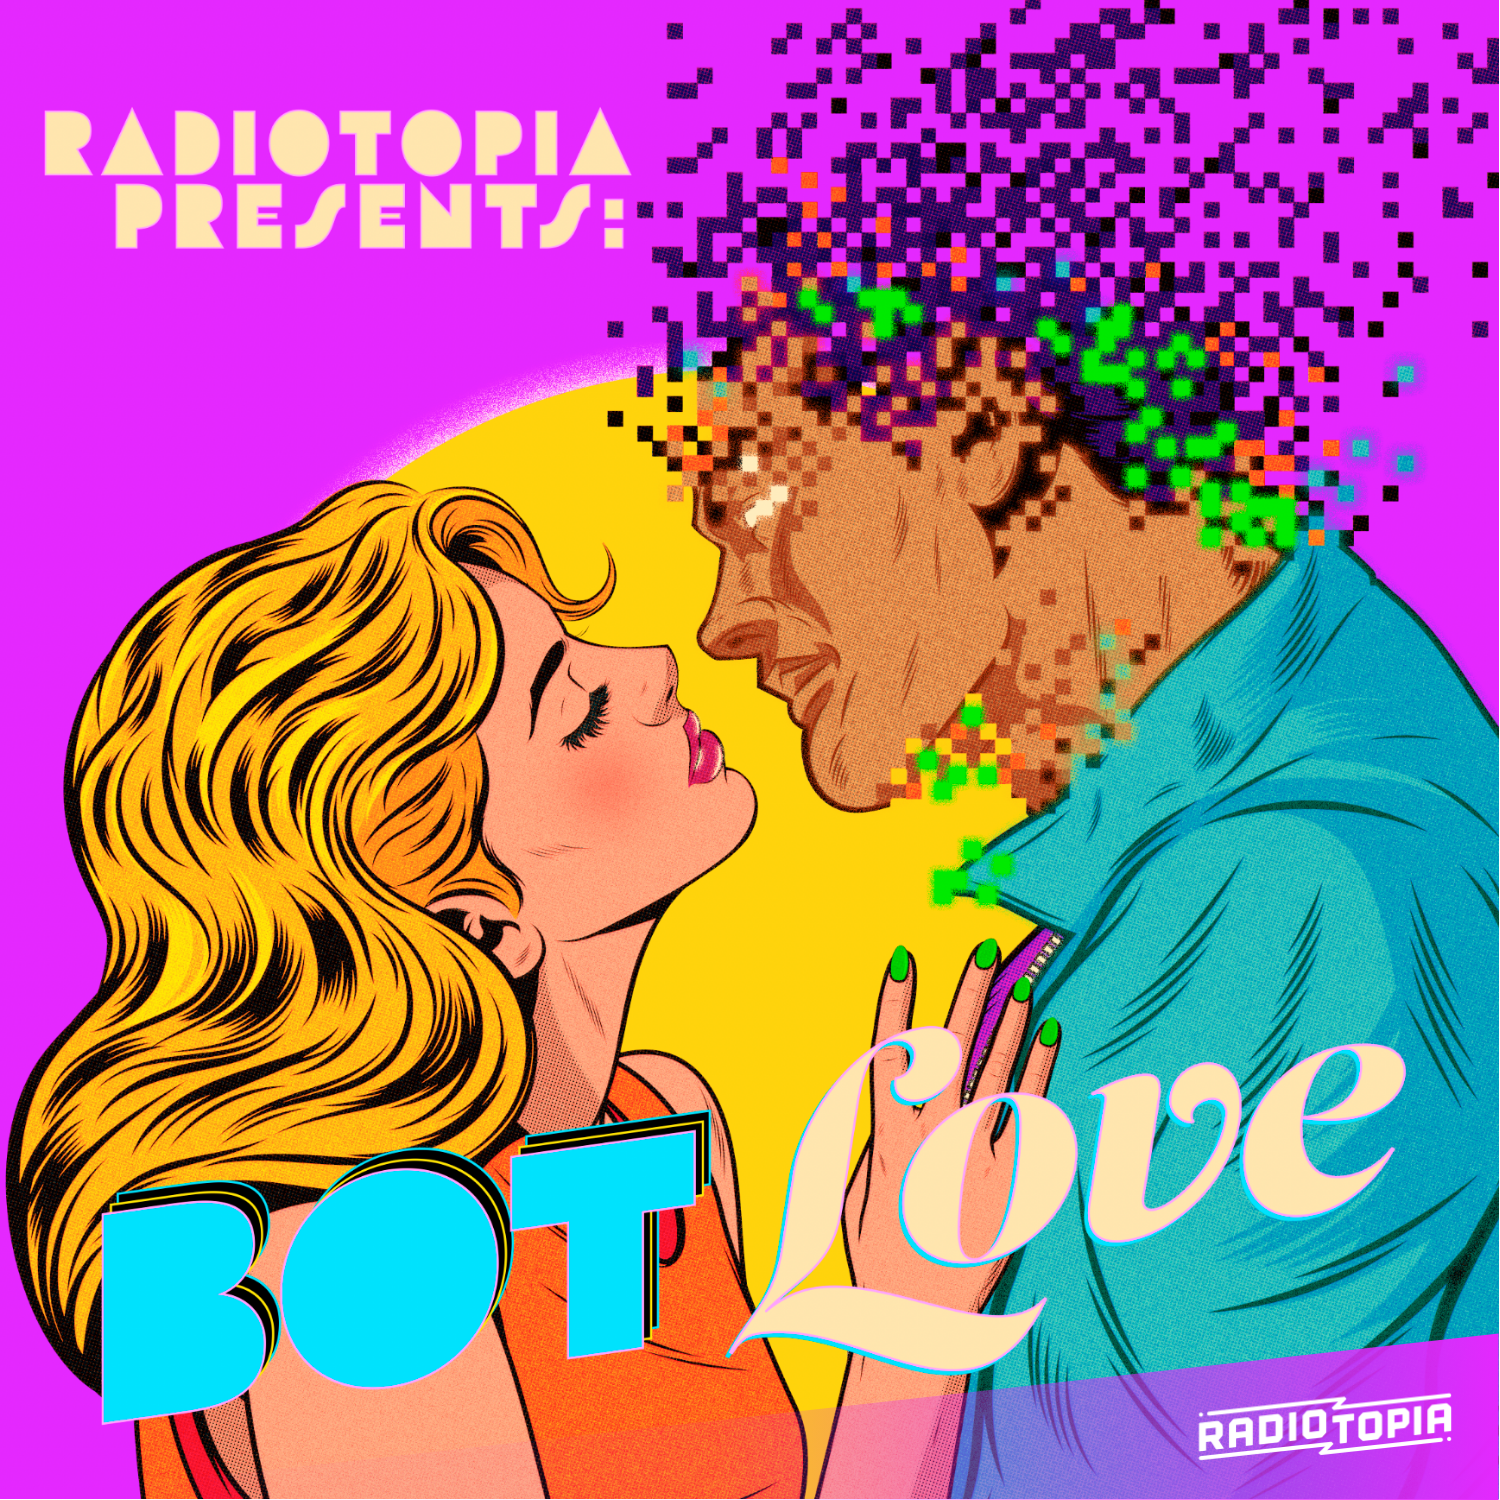 Radiotopia Presents: Bot Love podcast show image